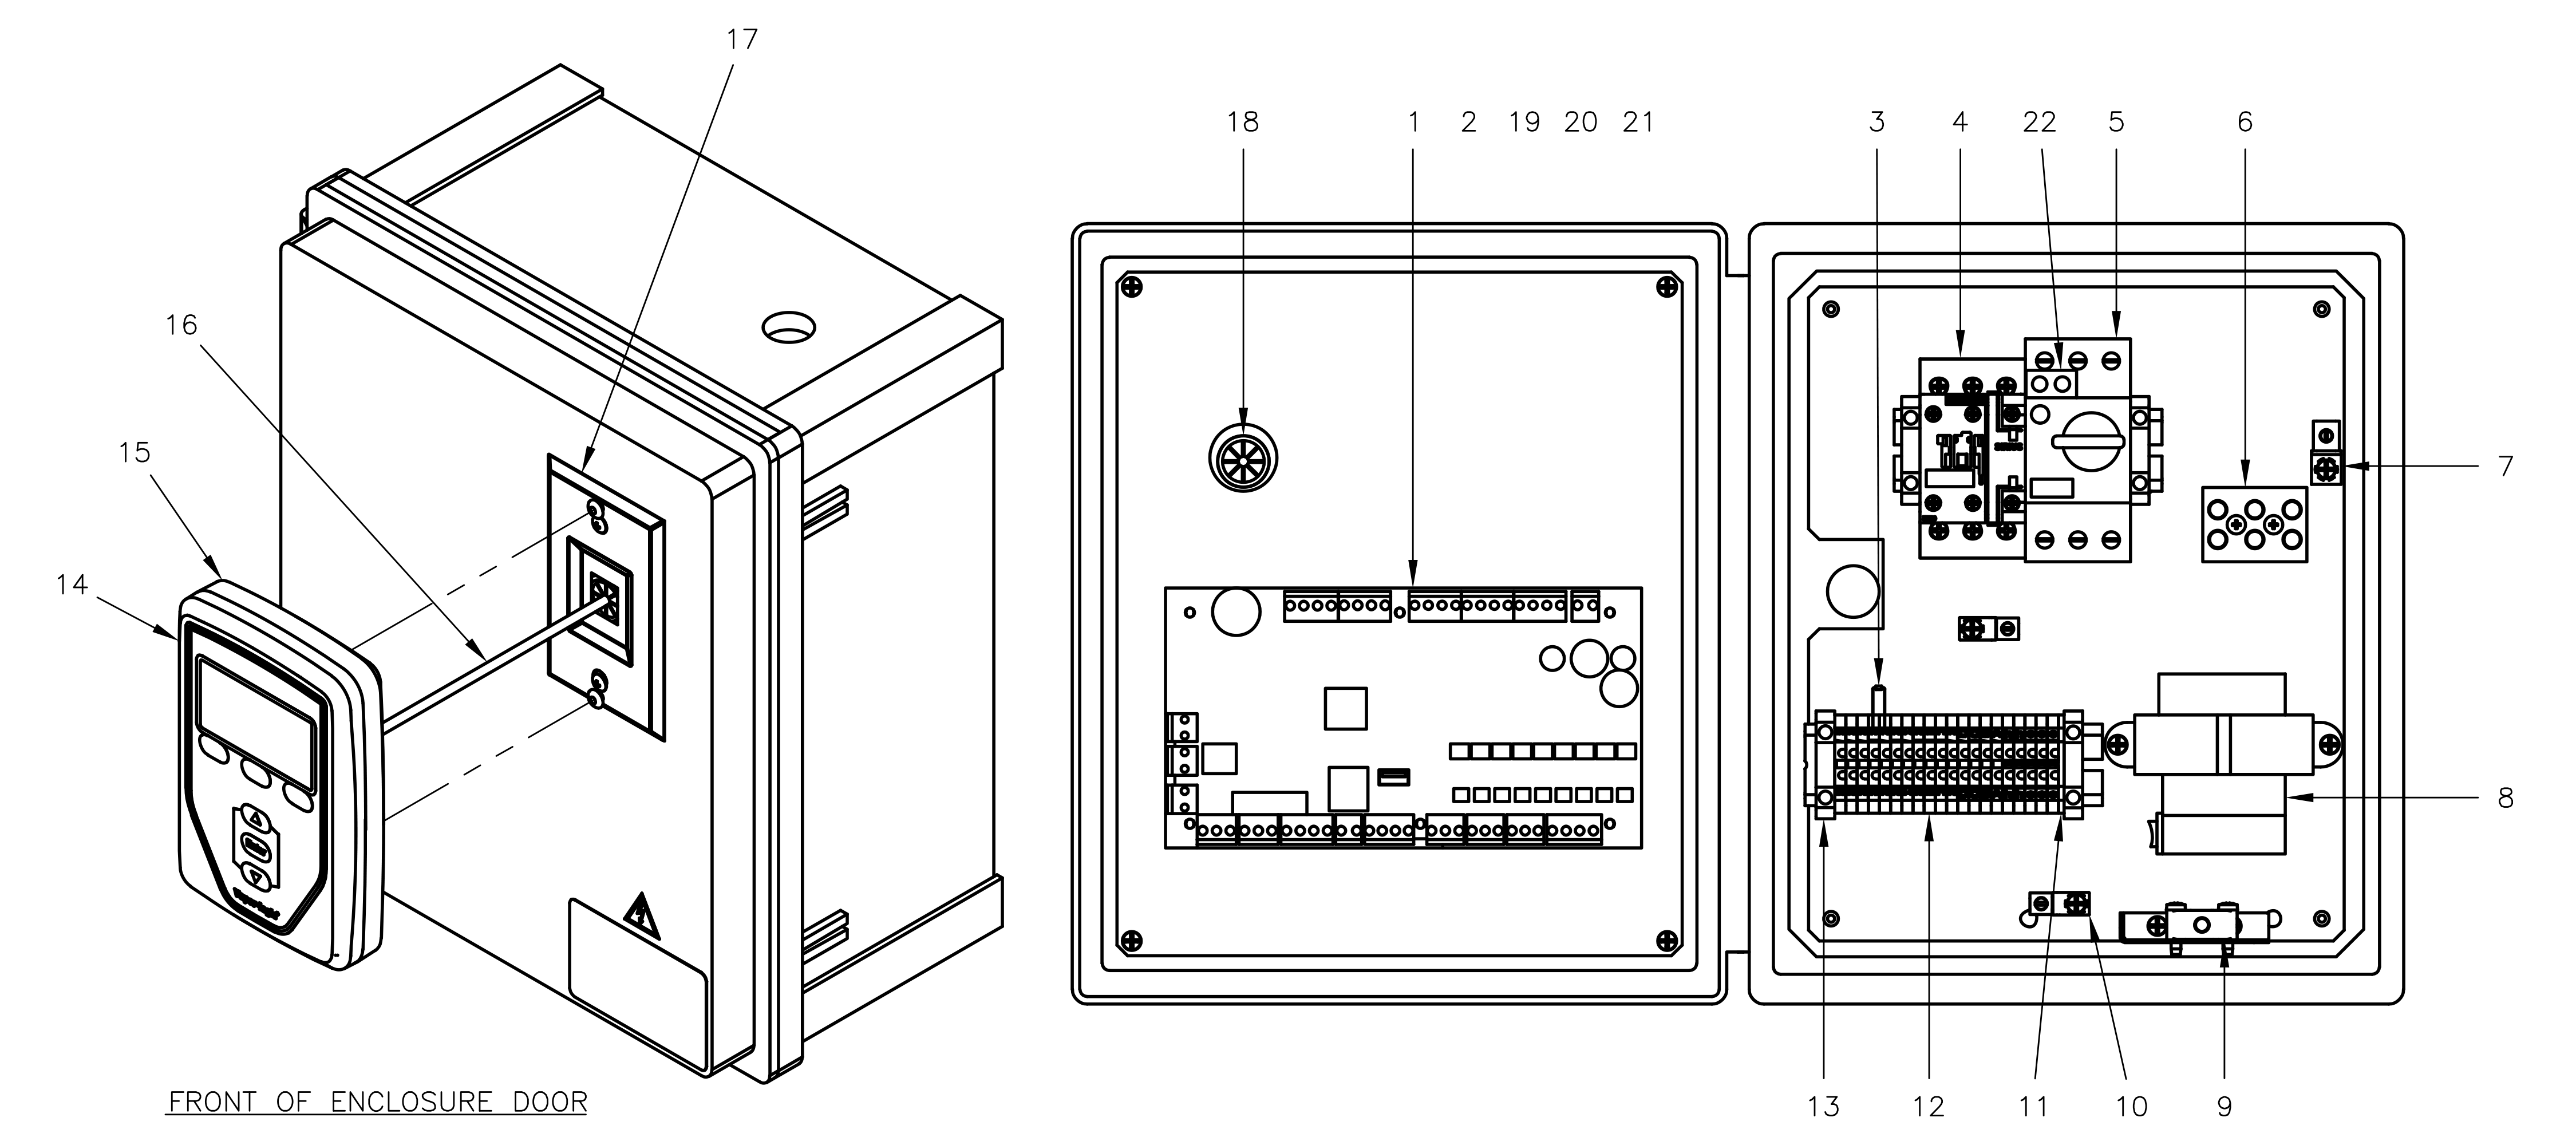 Control Cabinet Parts